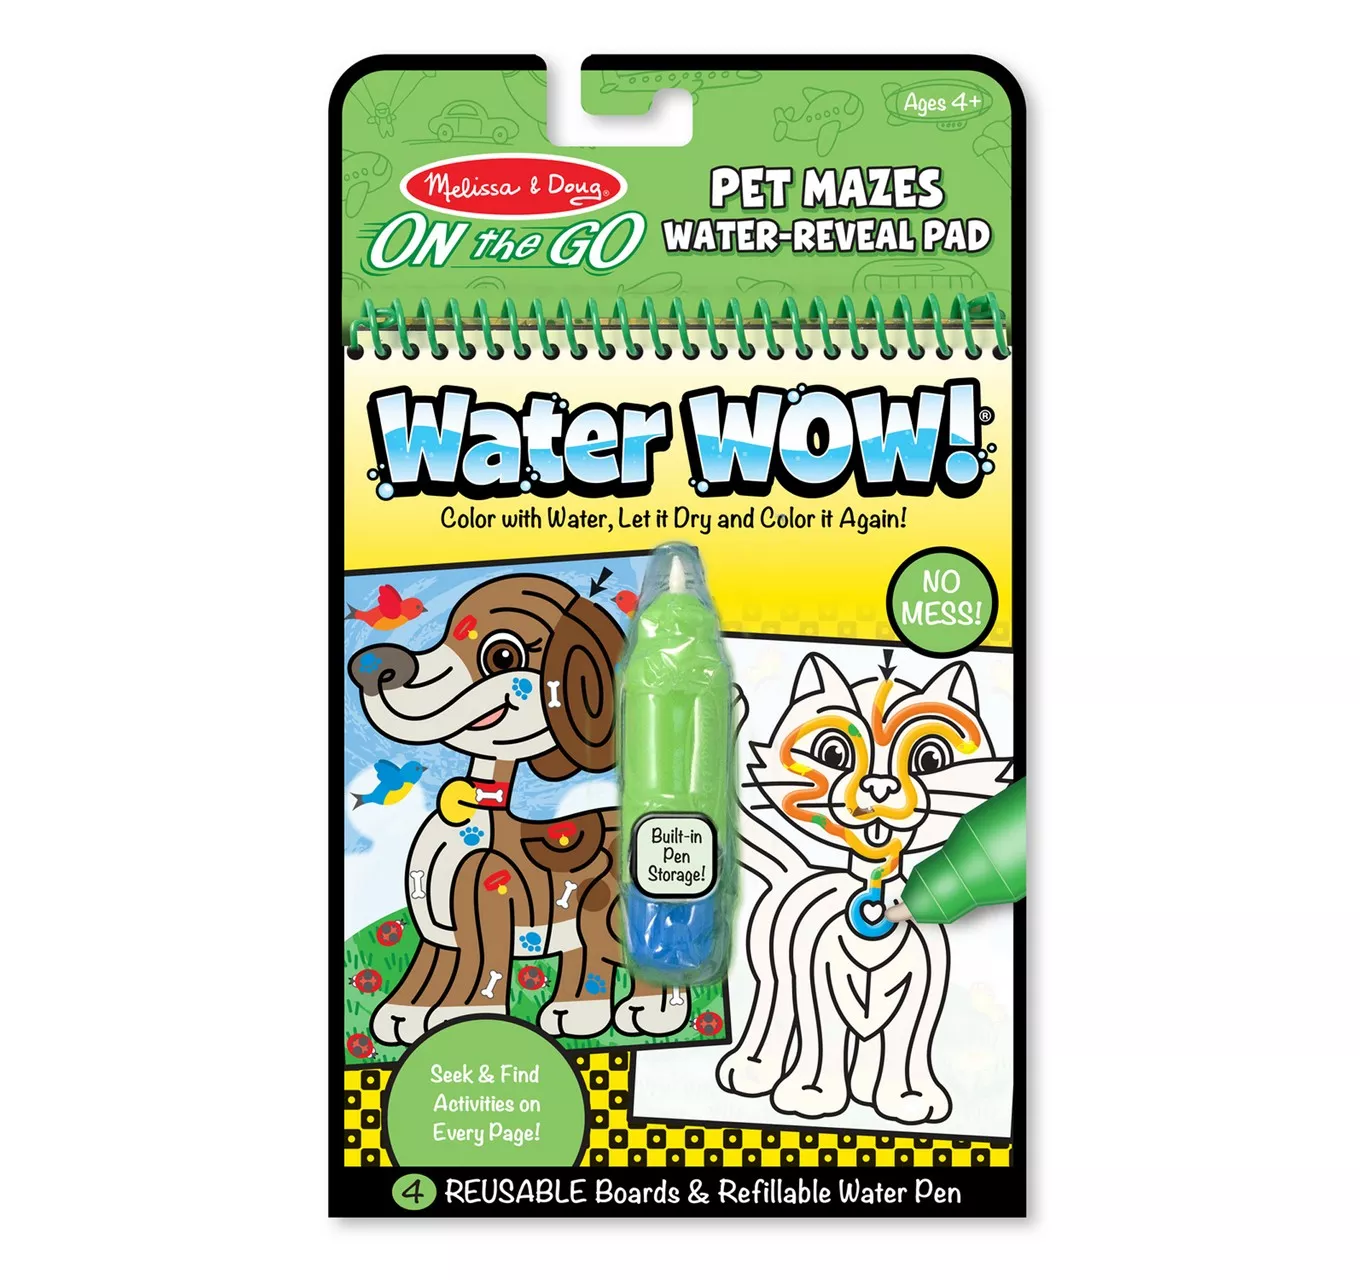 Water Wow! - Pet Mazes